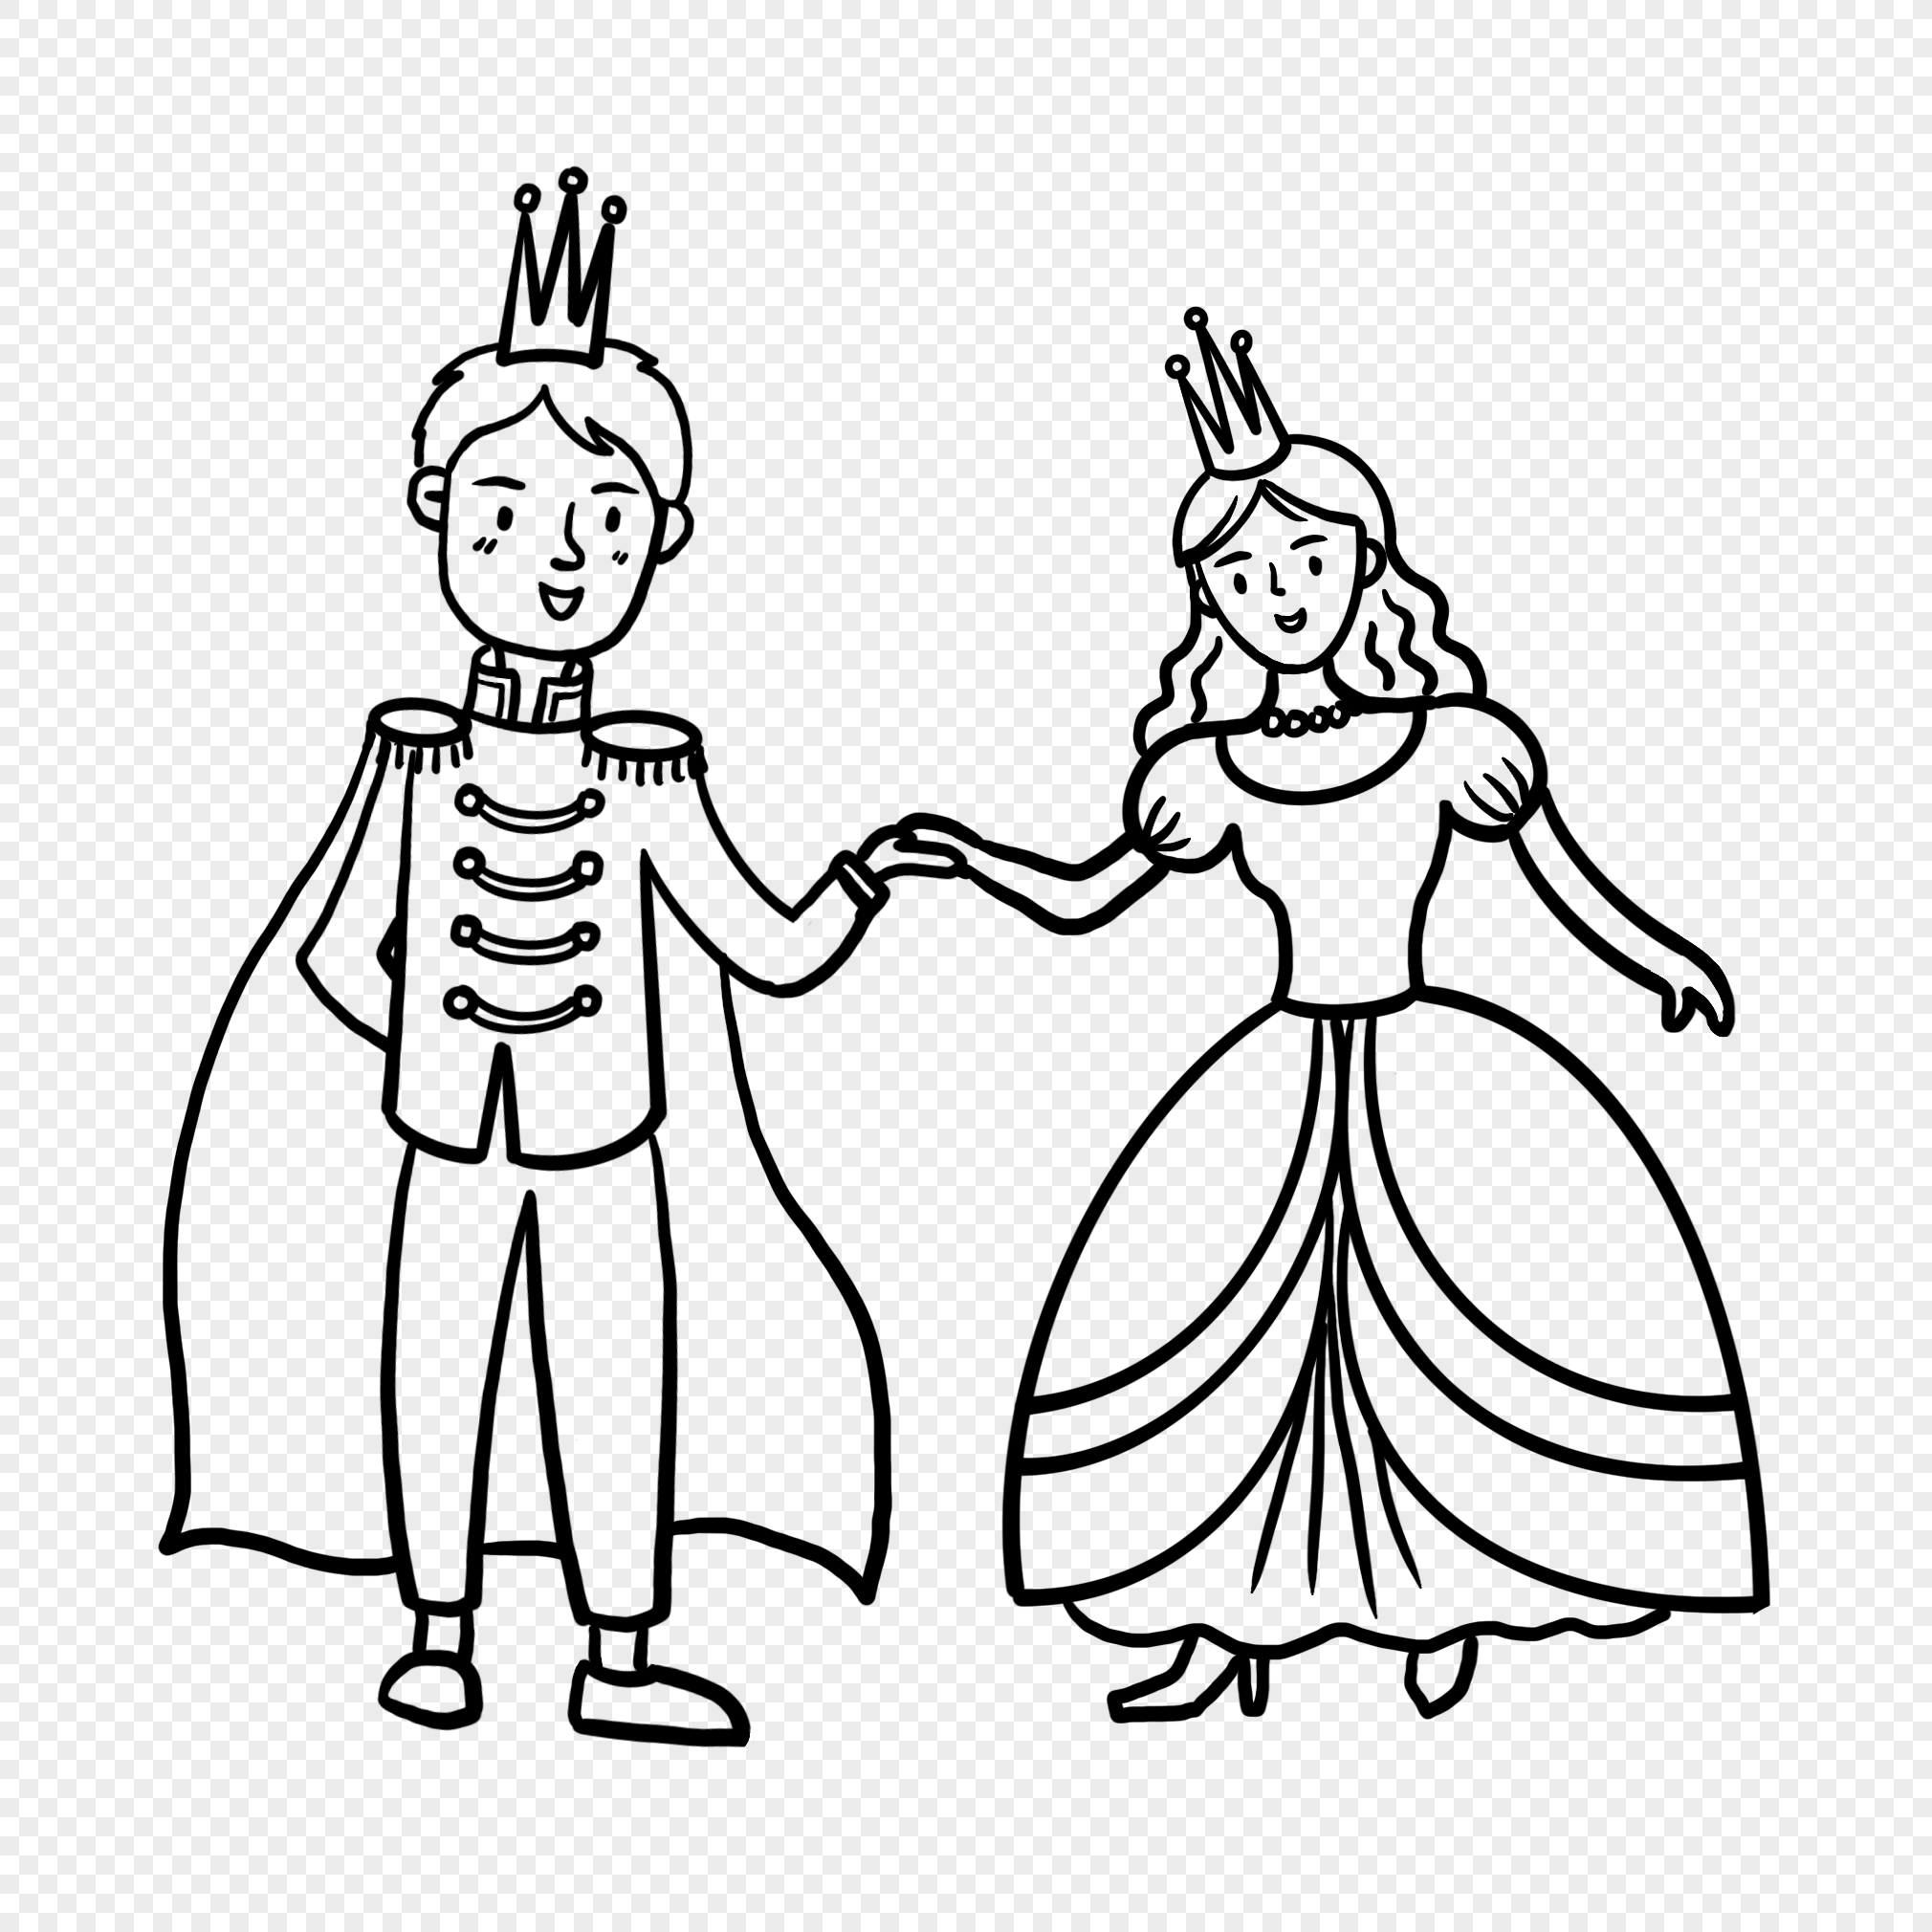 Prince and princess stick figure, princess, stick figure, cartoon character png transparent background